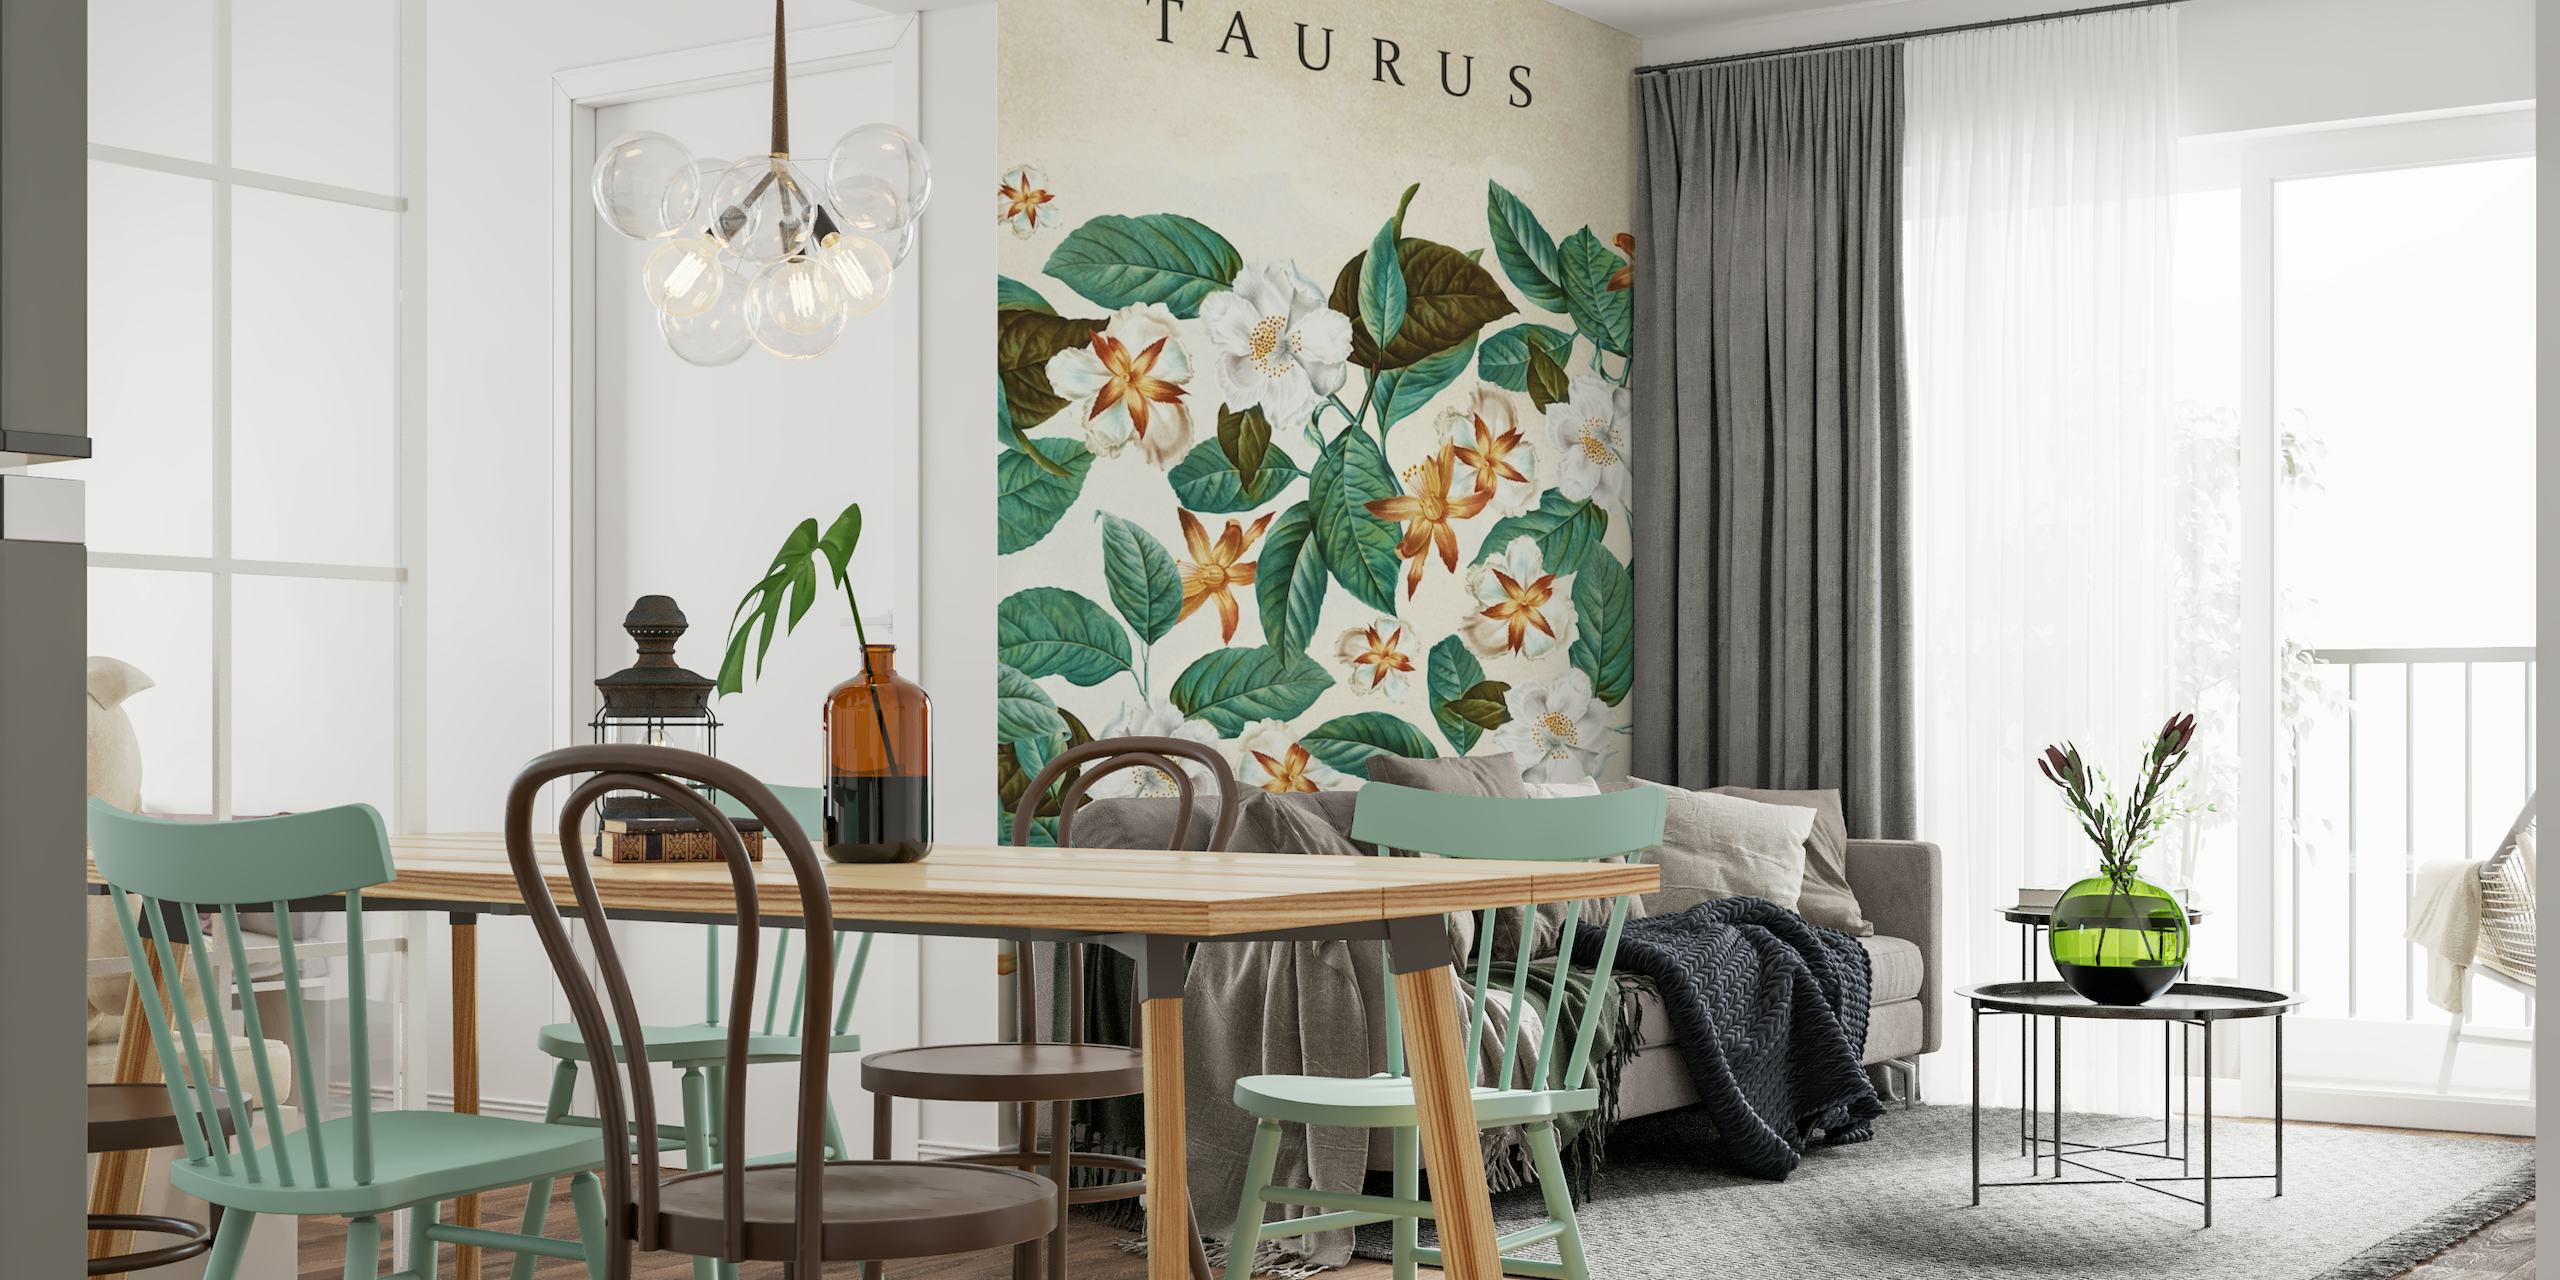 Taurus wallpaper